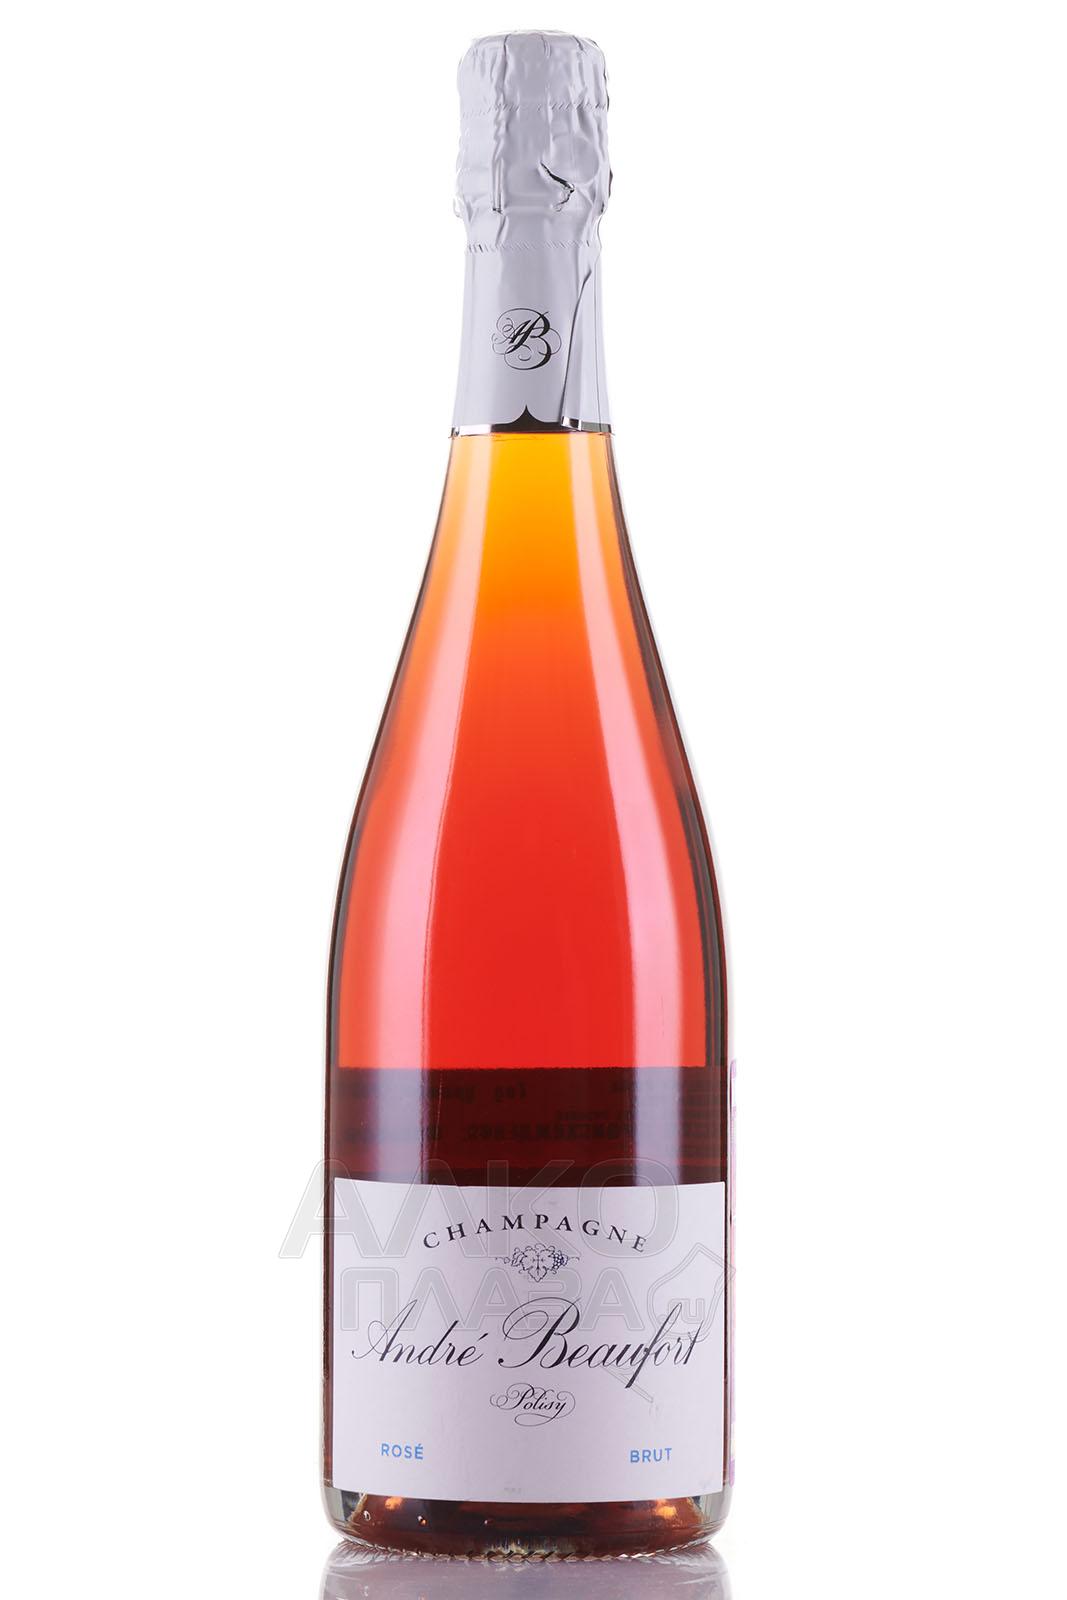 Andre Beaufort Polisy Rose - шампанское Андре Бофор Полизи Розе 0.75 л